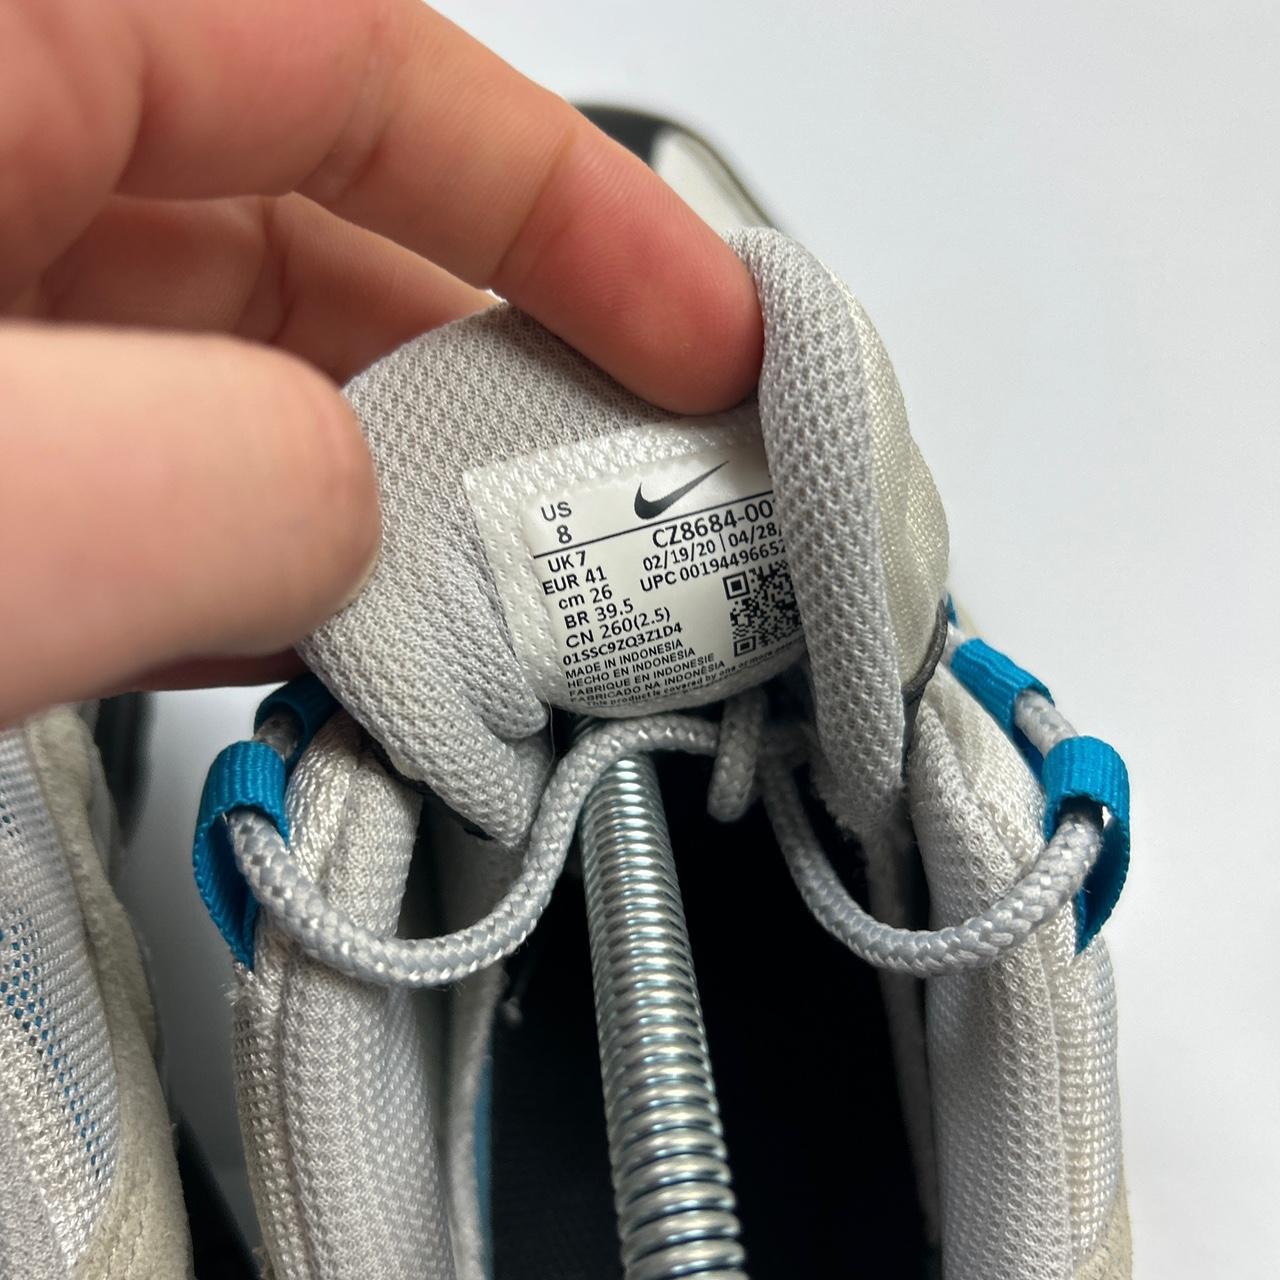 Nike Laser Blue 95s (UK 7)